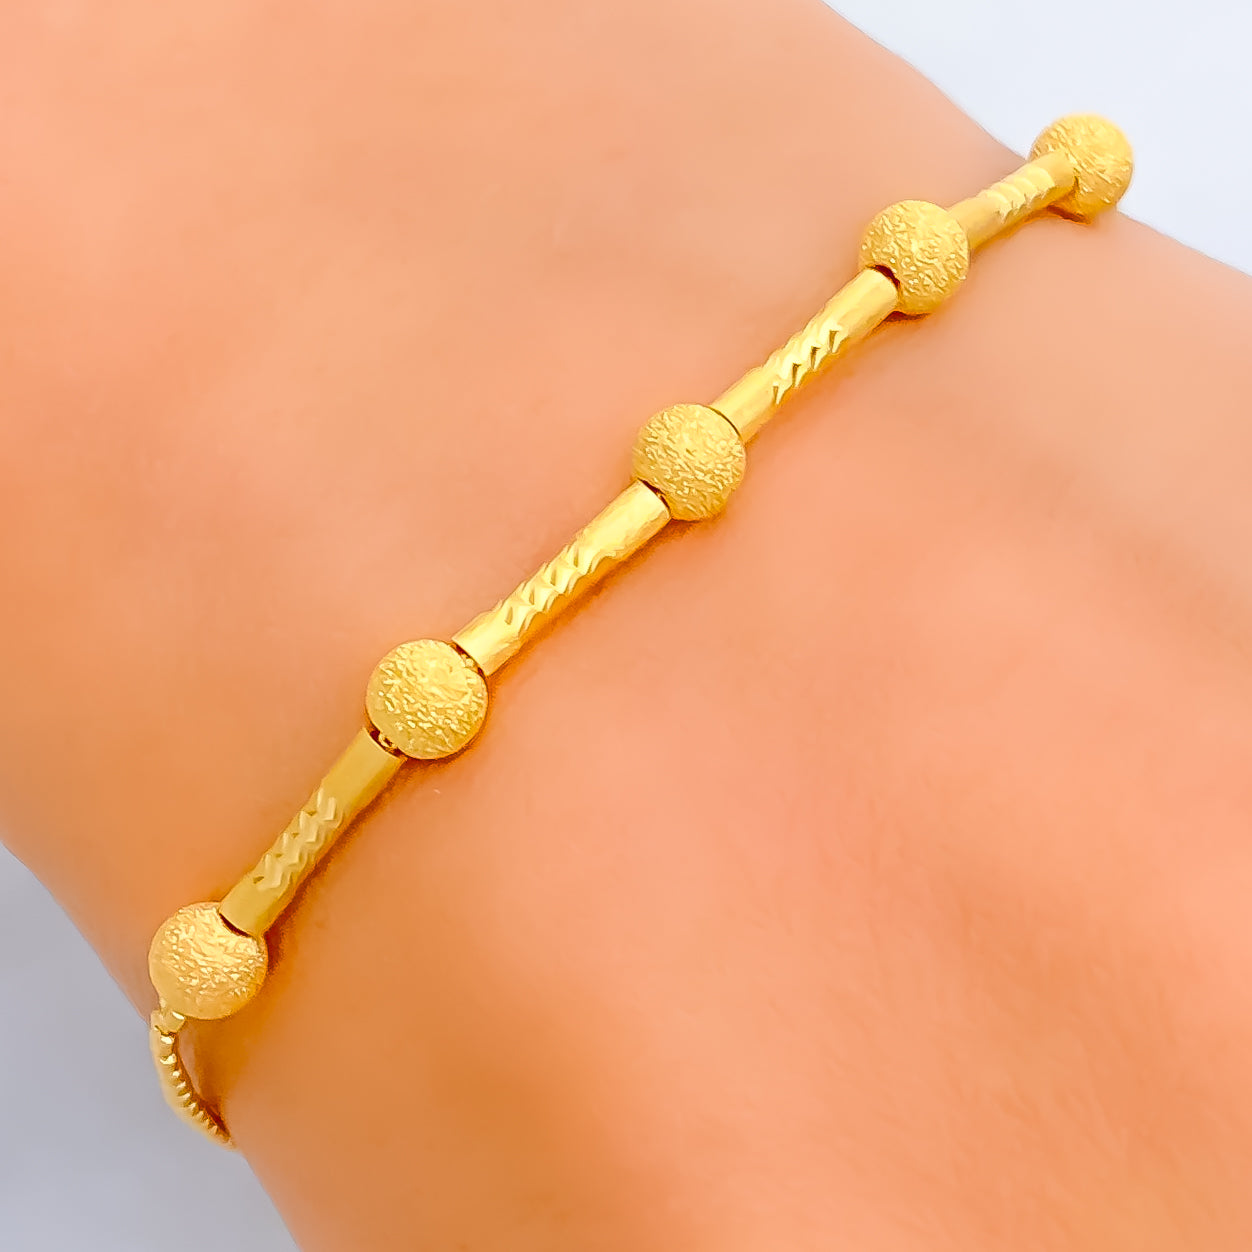 Fashion jewelry bracelets gold bangle bracelets| Alibaba.com